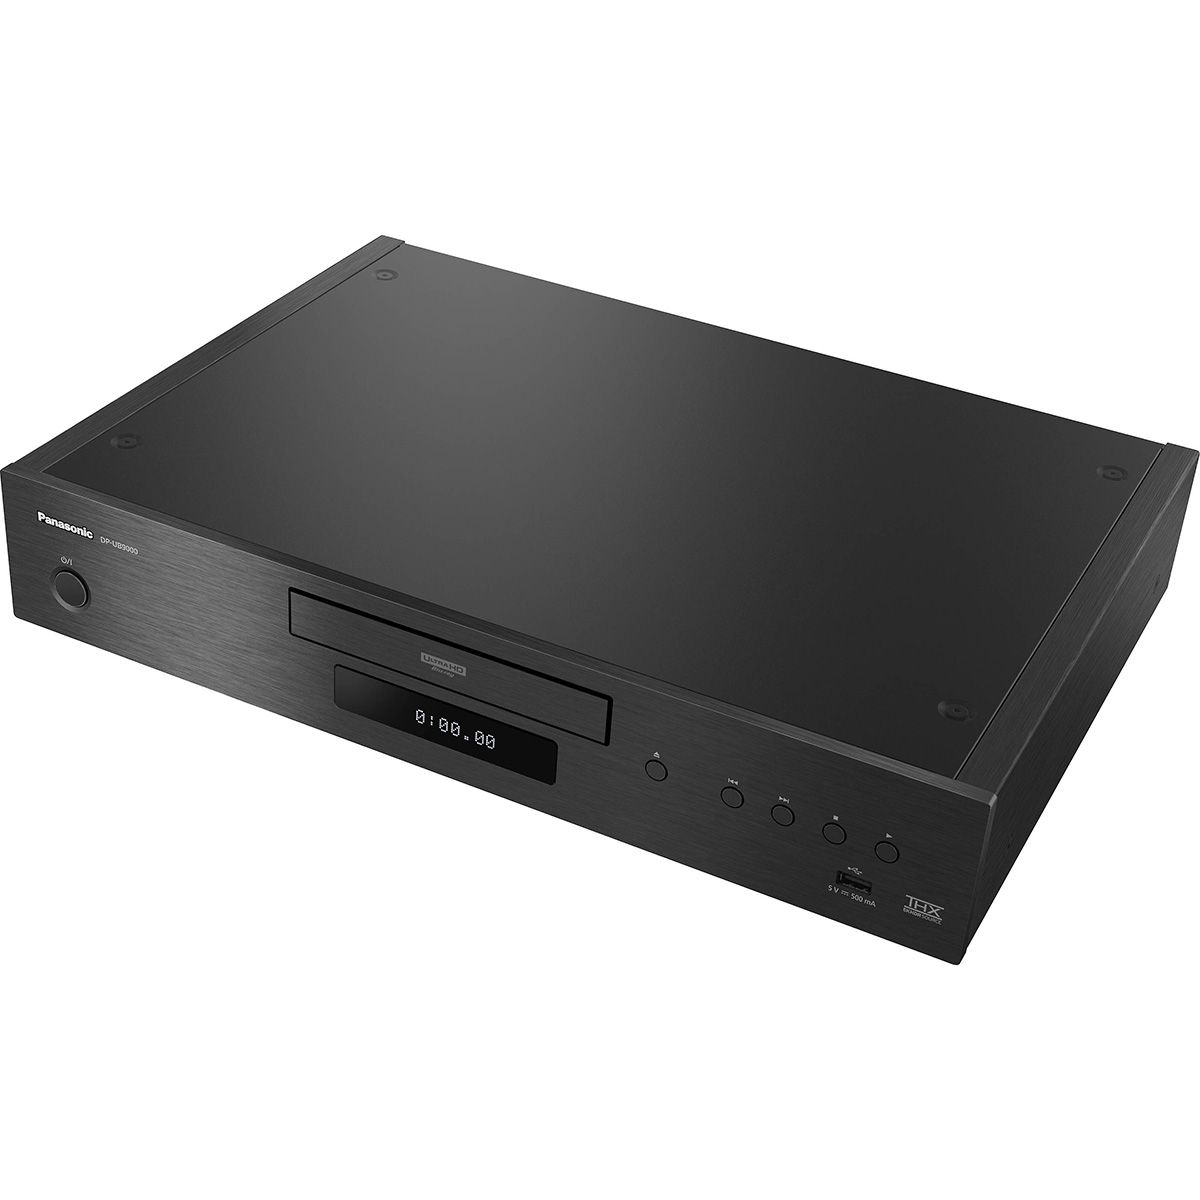 Panasonic DP-UB9000 Deluxe Blu-ray Player